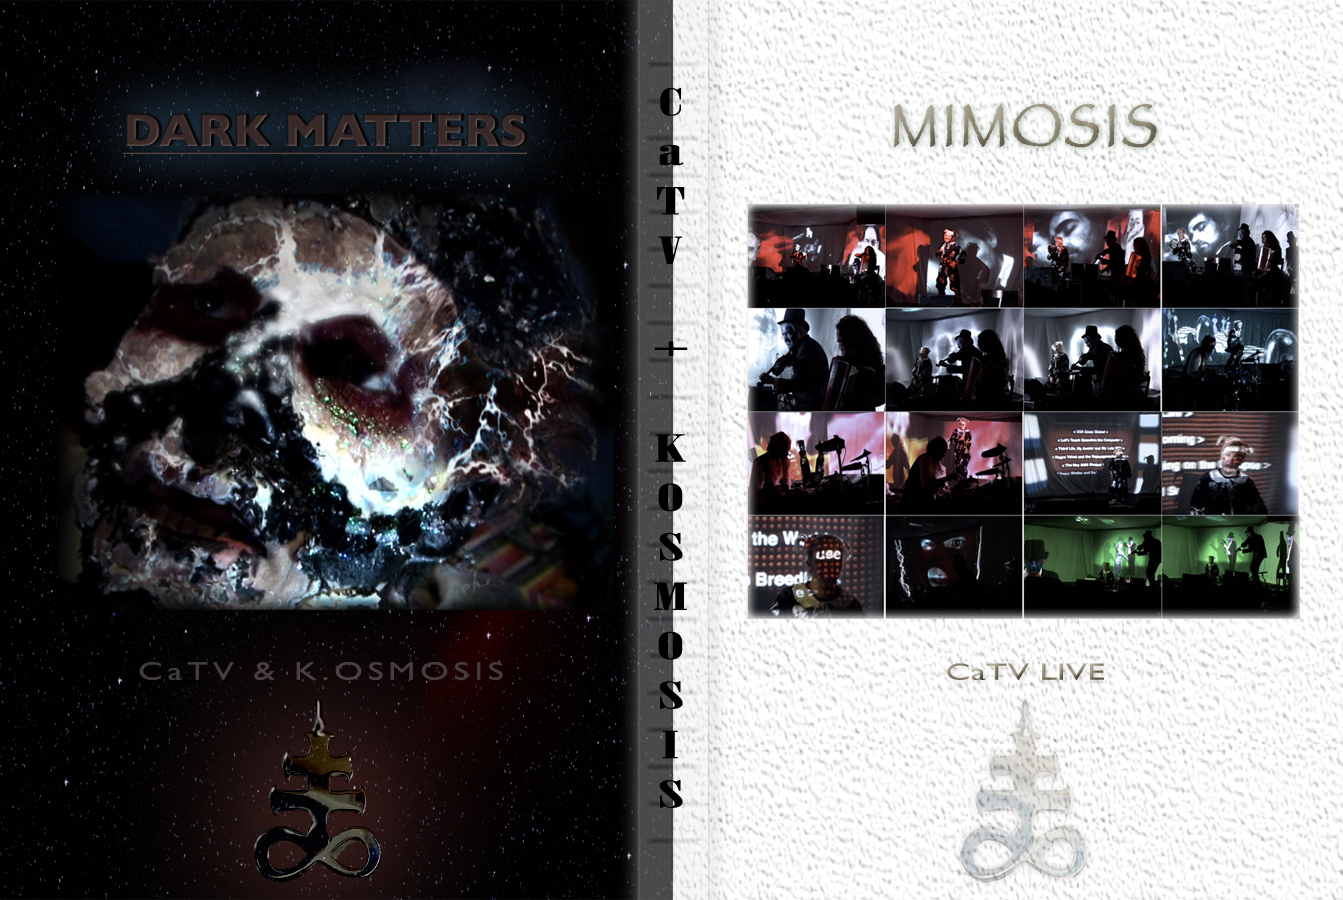 MIMOSIS - DARK MATTERS - DVD JACKET